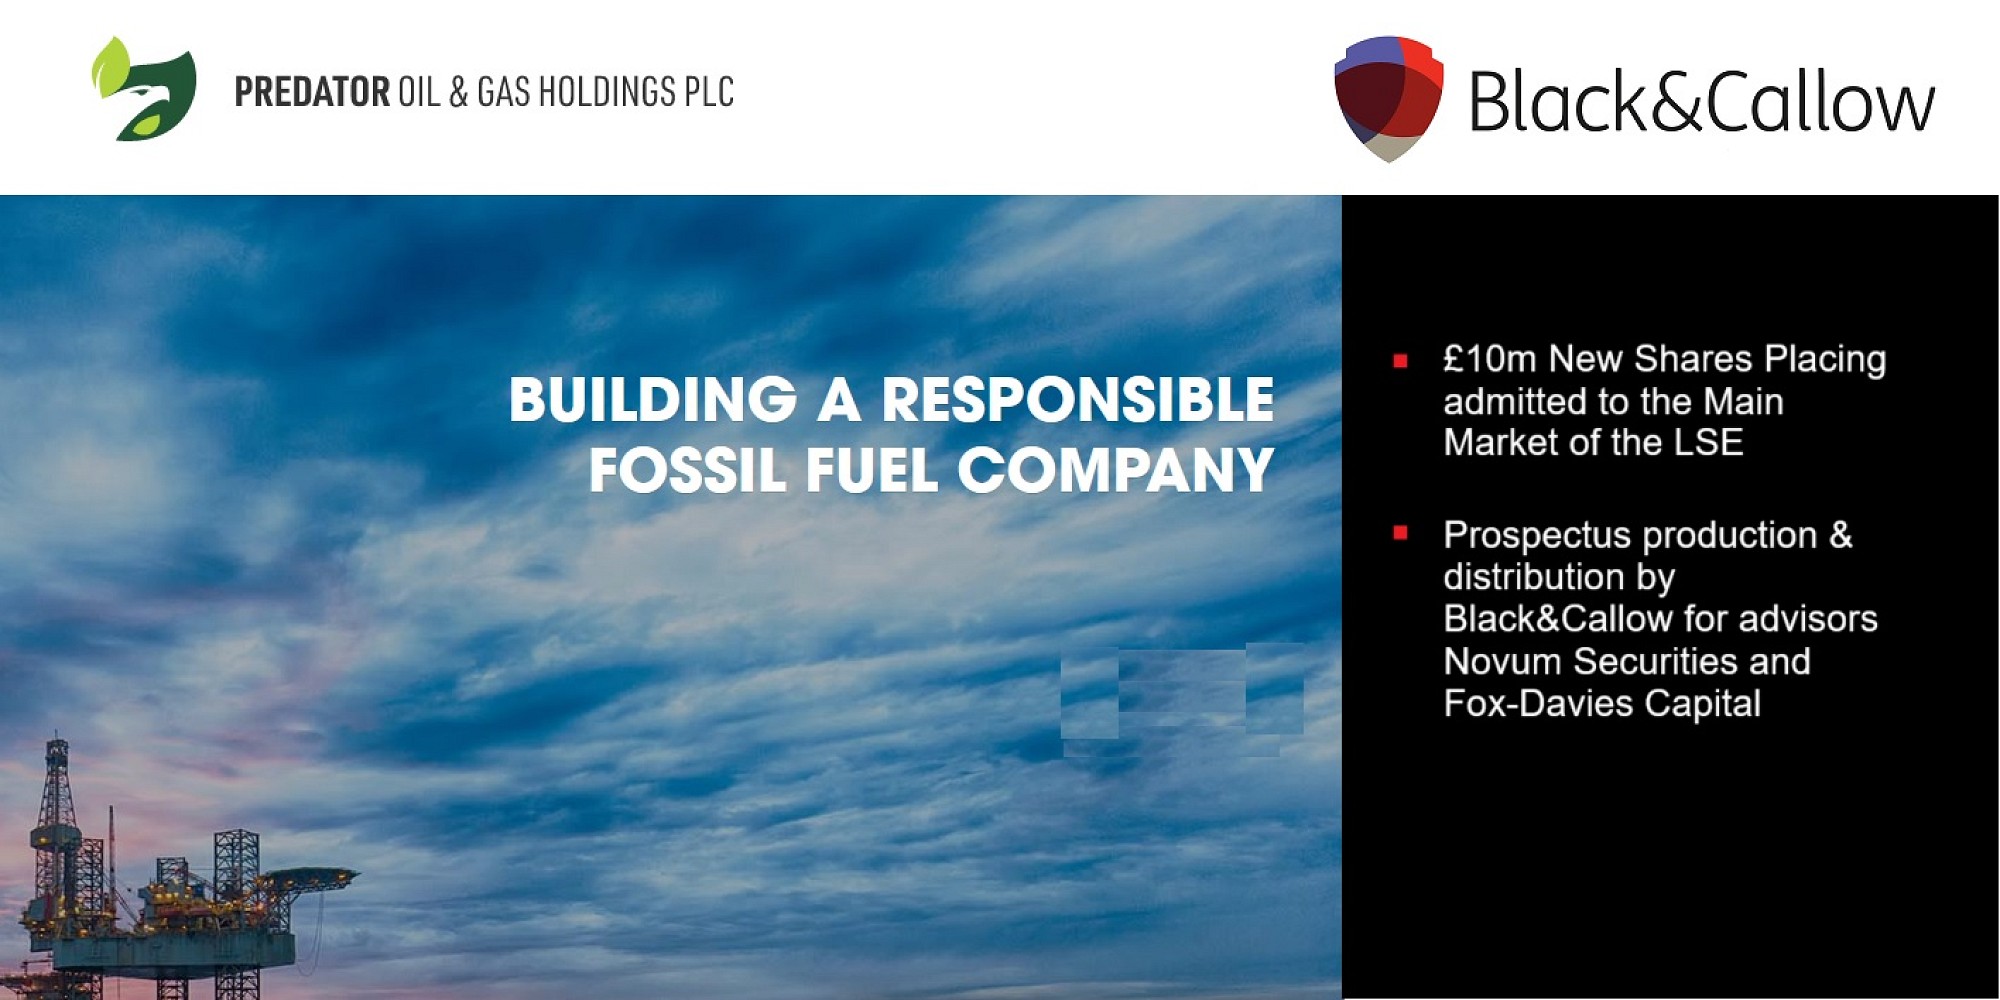 B&C helps fuel Predator Oil & Gas's successful capital raising